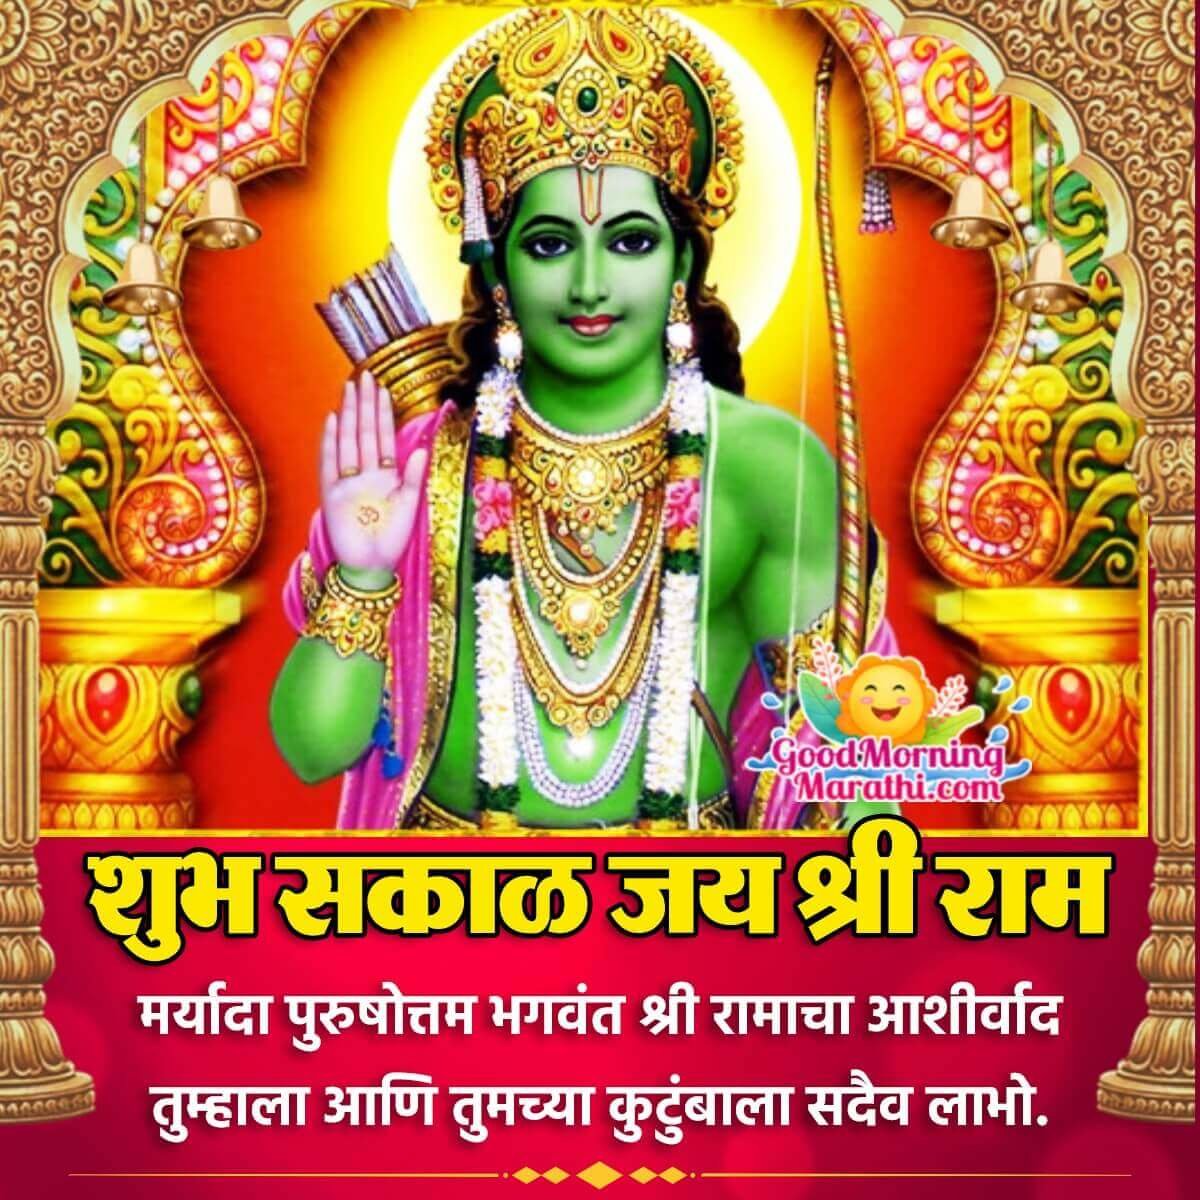 Good Morning Jai Shri Ram Wish Picture